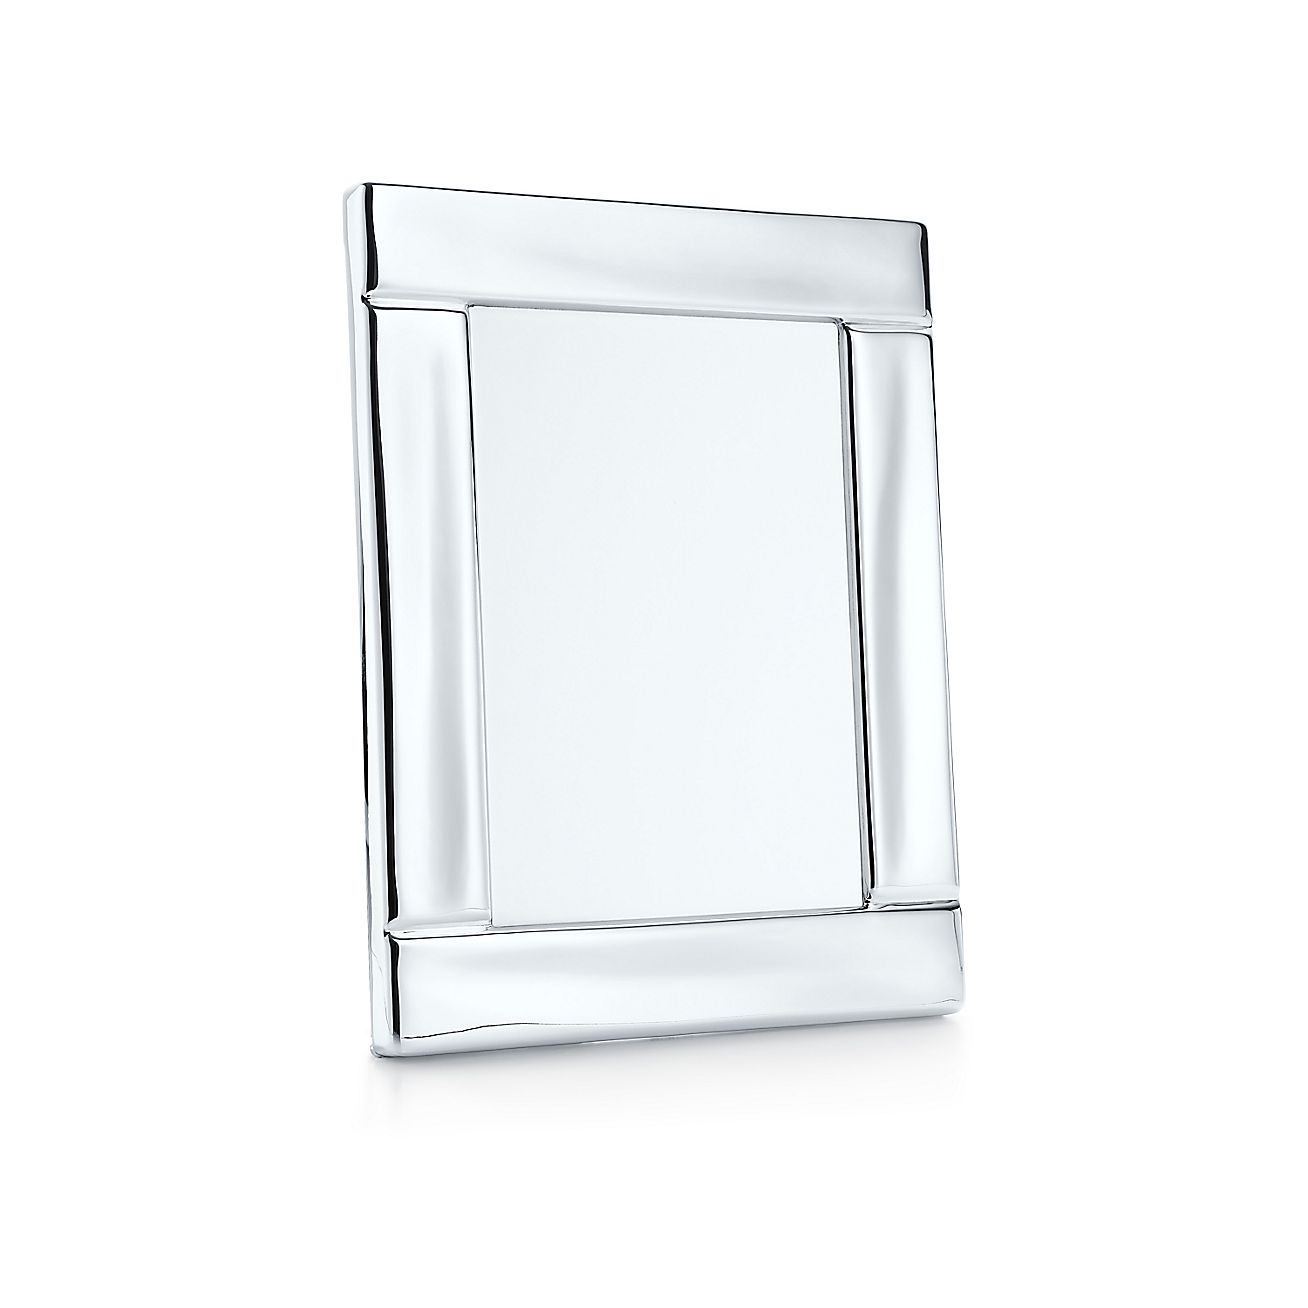 Elsa Peretti® Full Heart desk mirror in sterling silver.